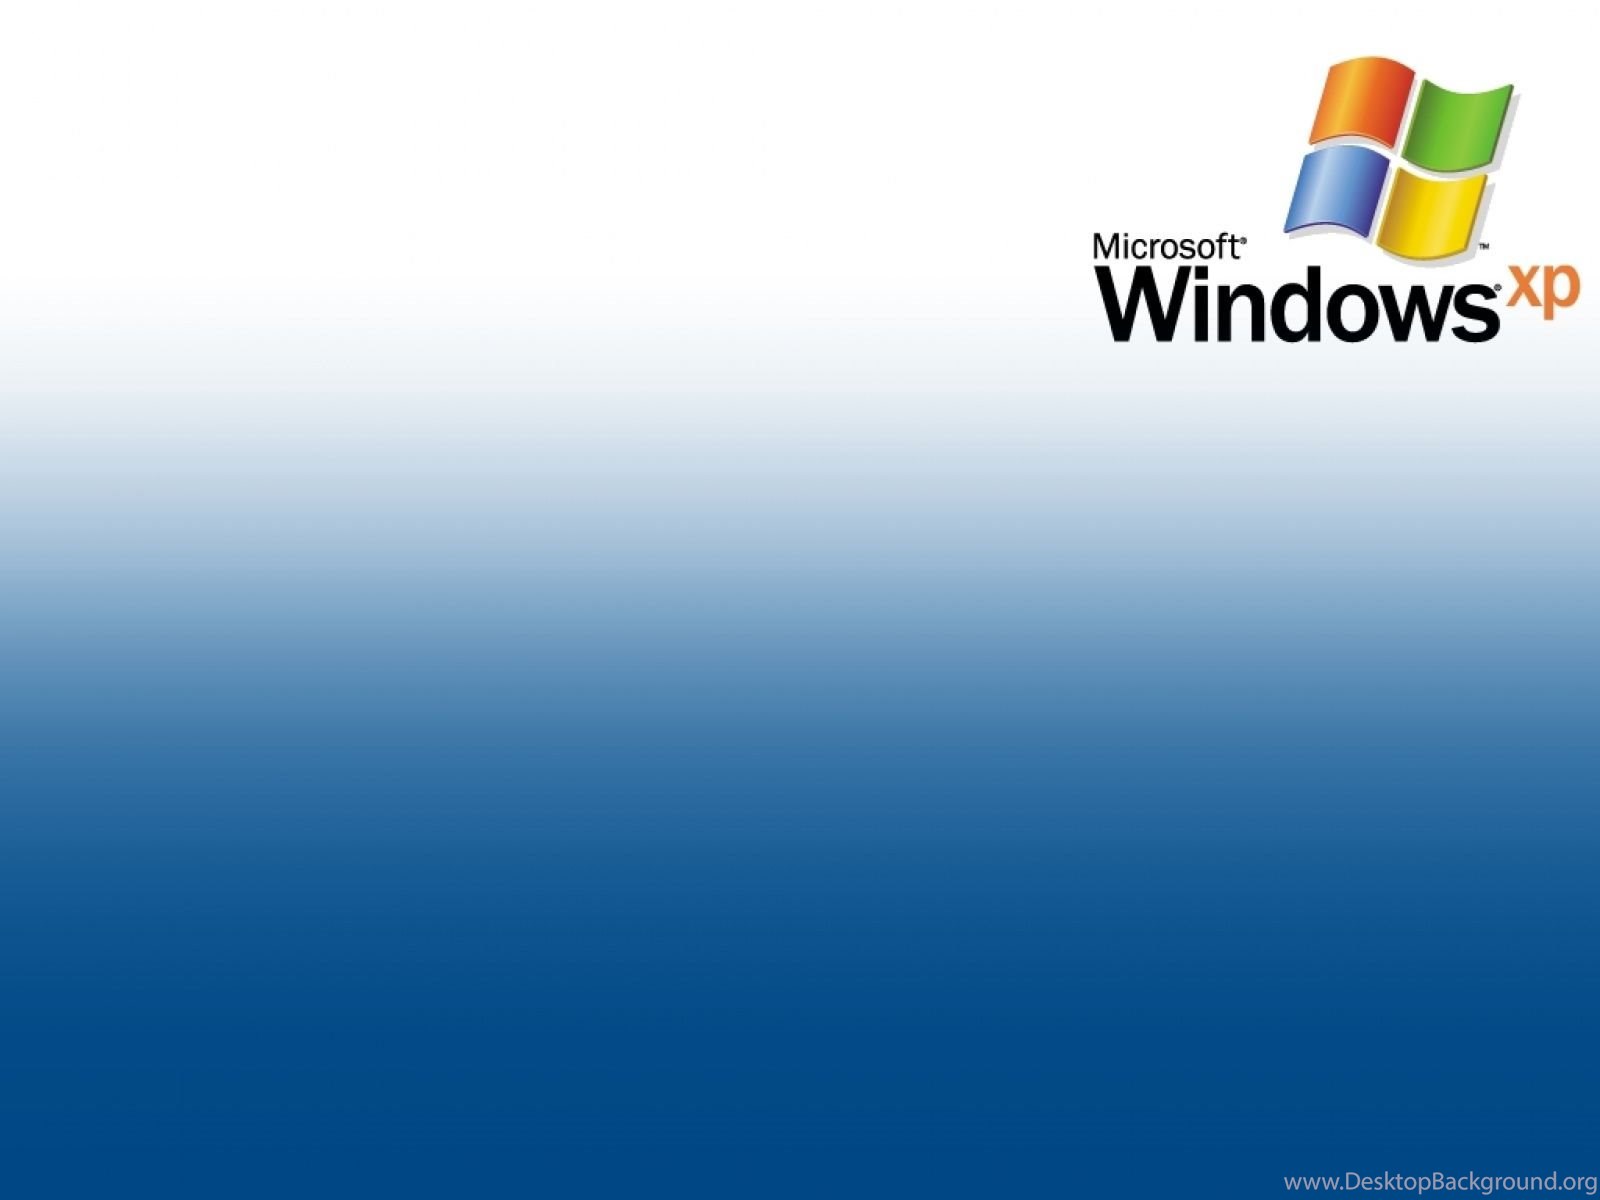 Microsoft Windows Xp Wallpaper Desktop Background